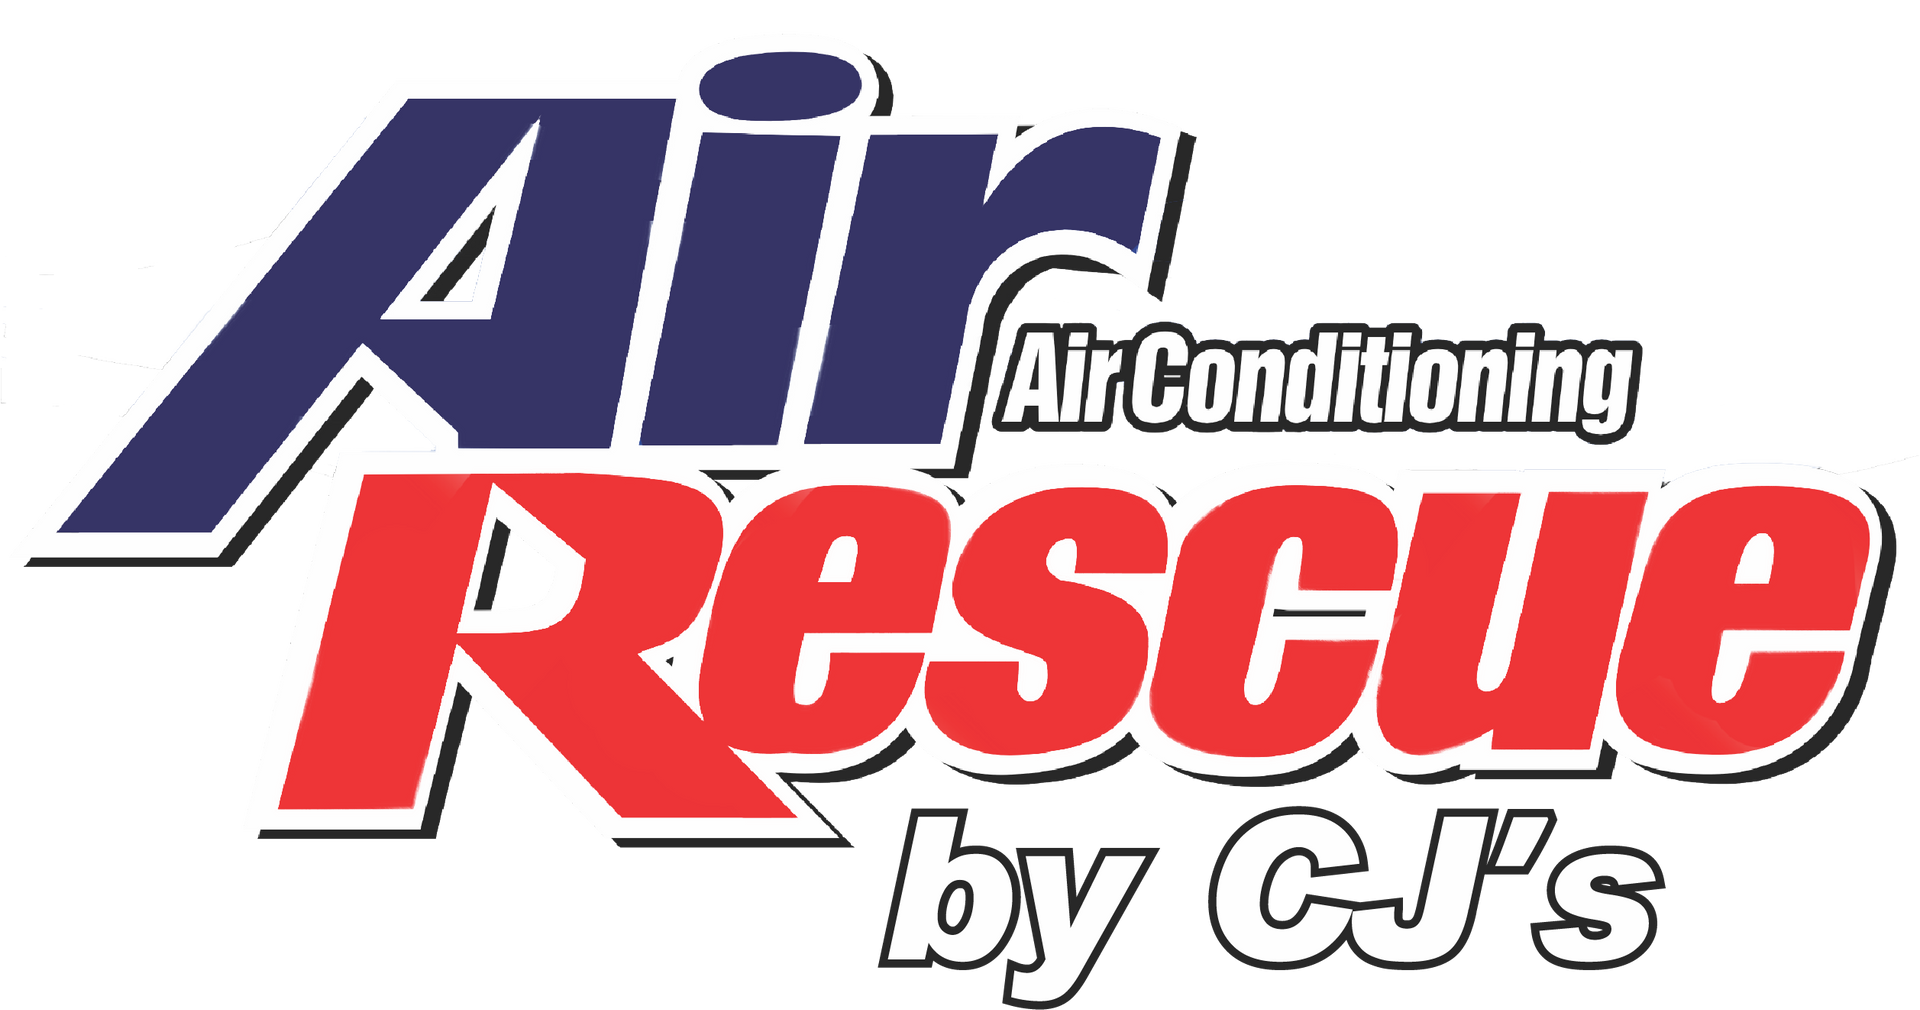 Air Rescue by CJs Header Logo